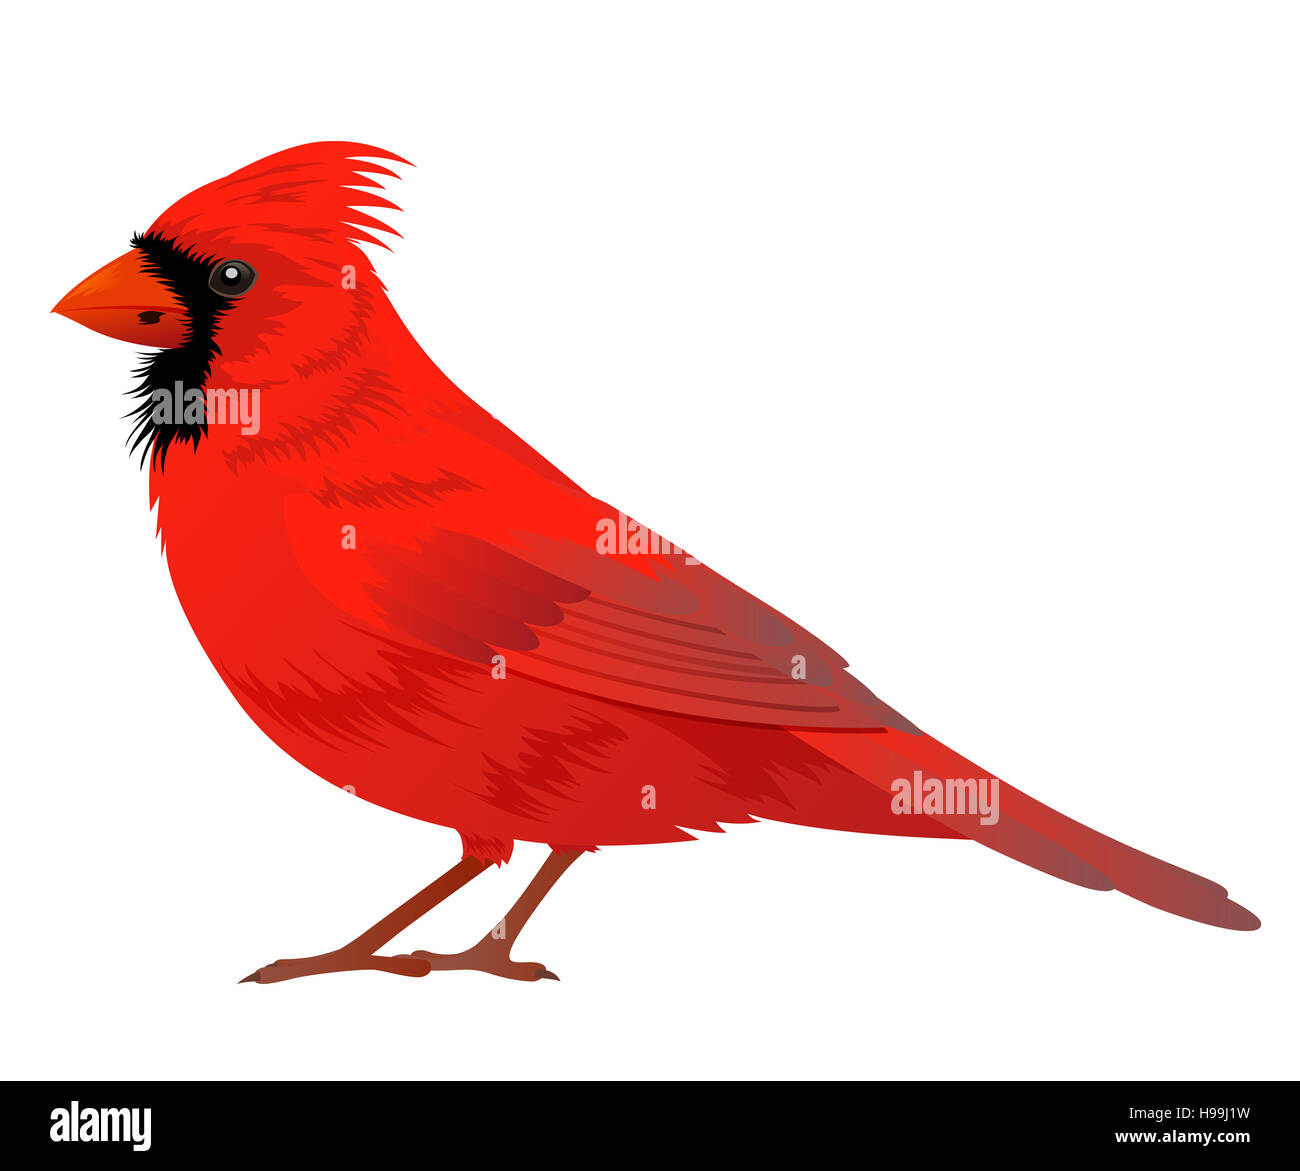 Cardinal bird cut out stock images pictures